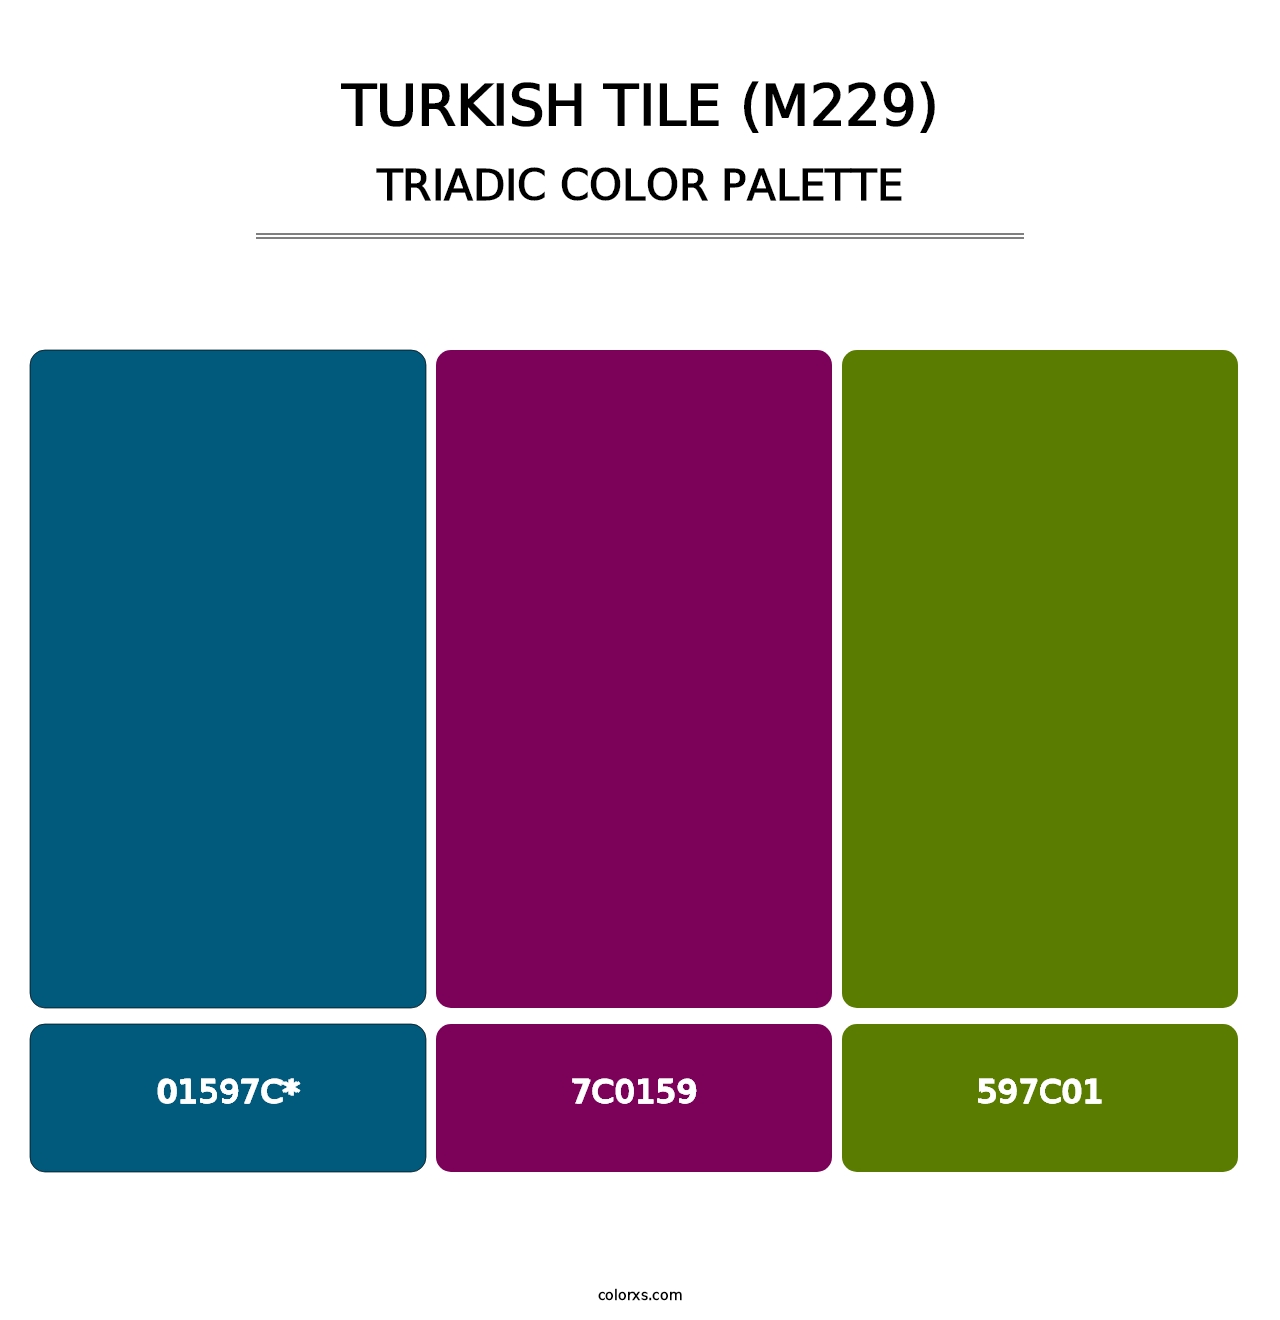 Turkish Tile (M229) - Triadic Color Palette